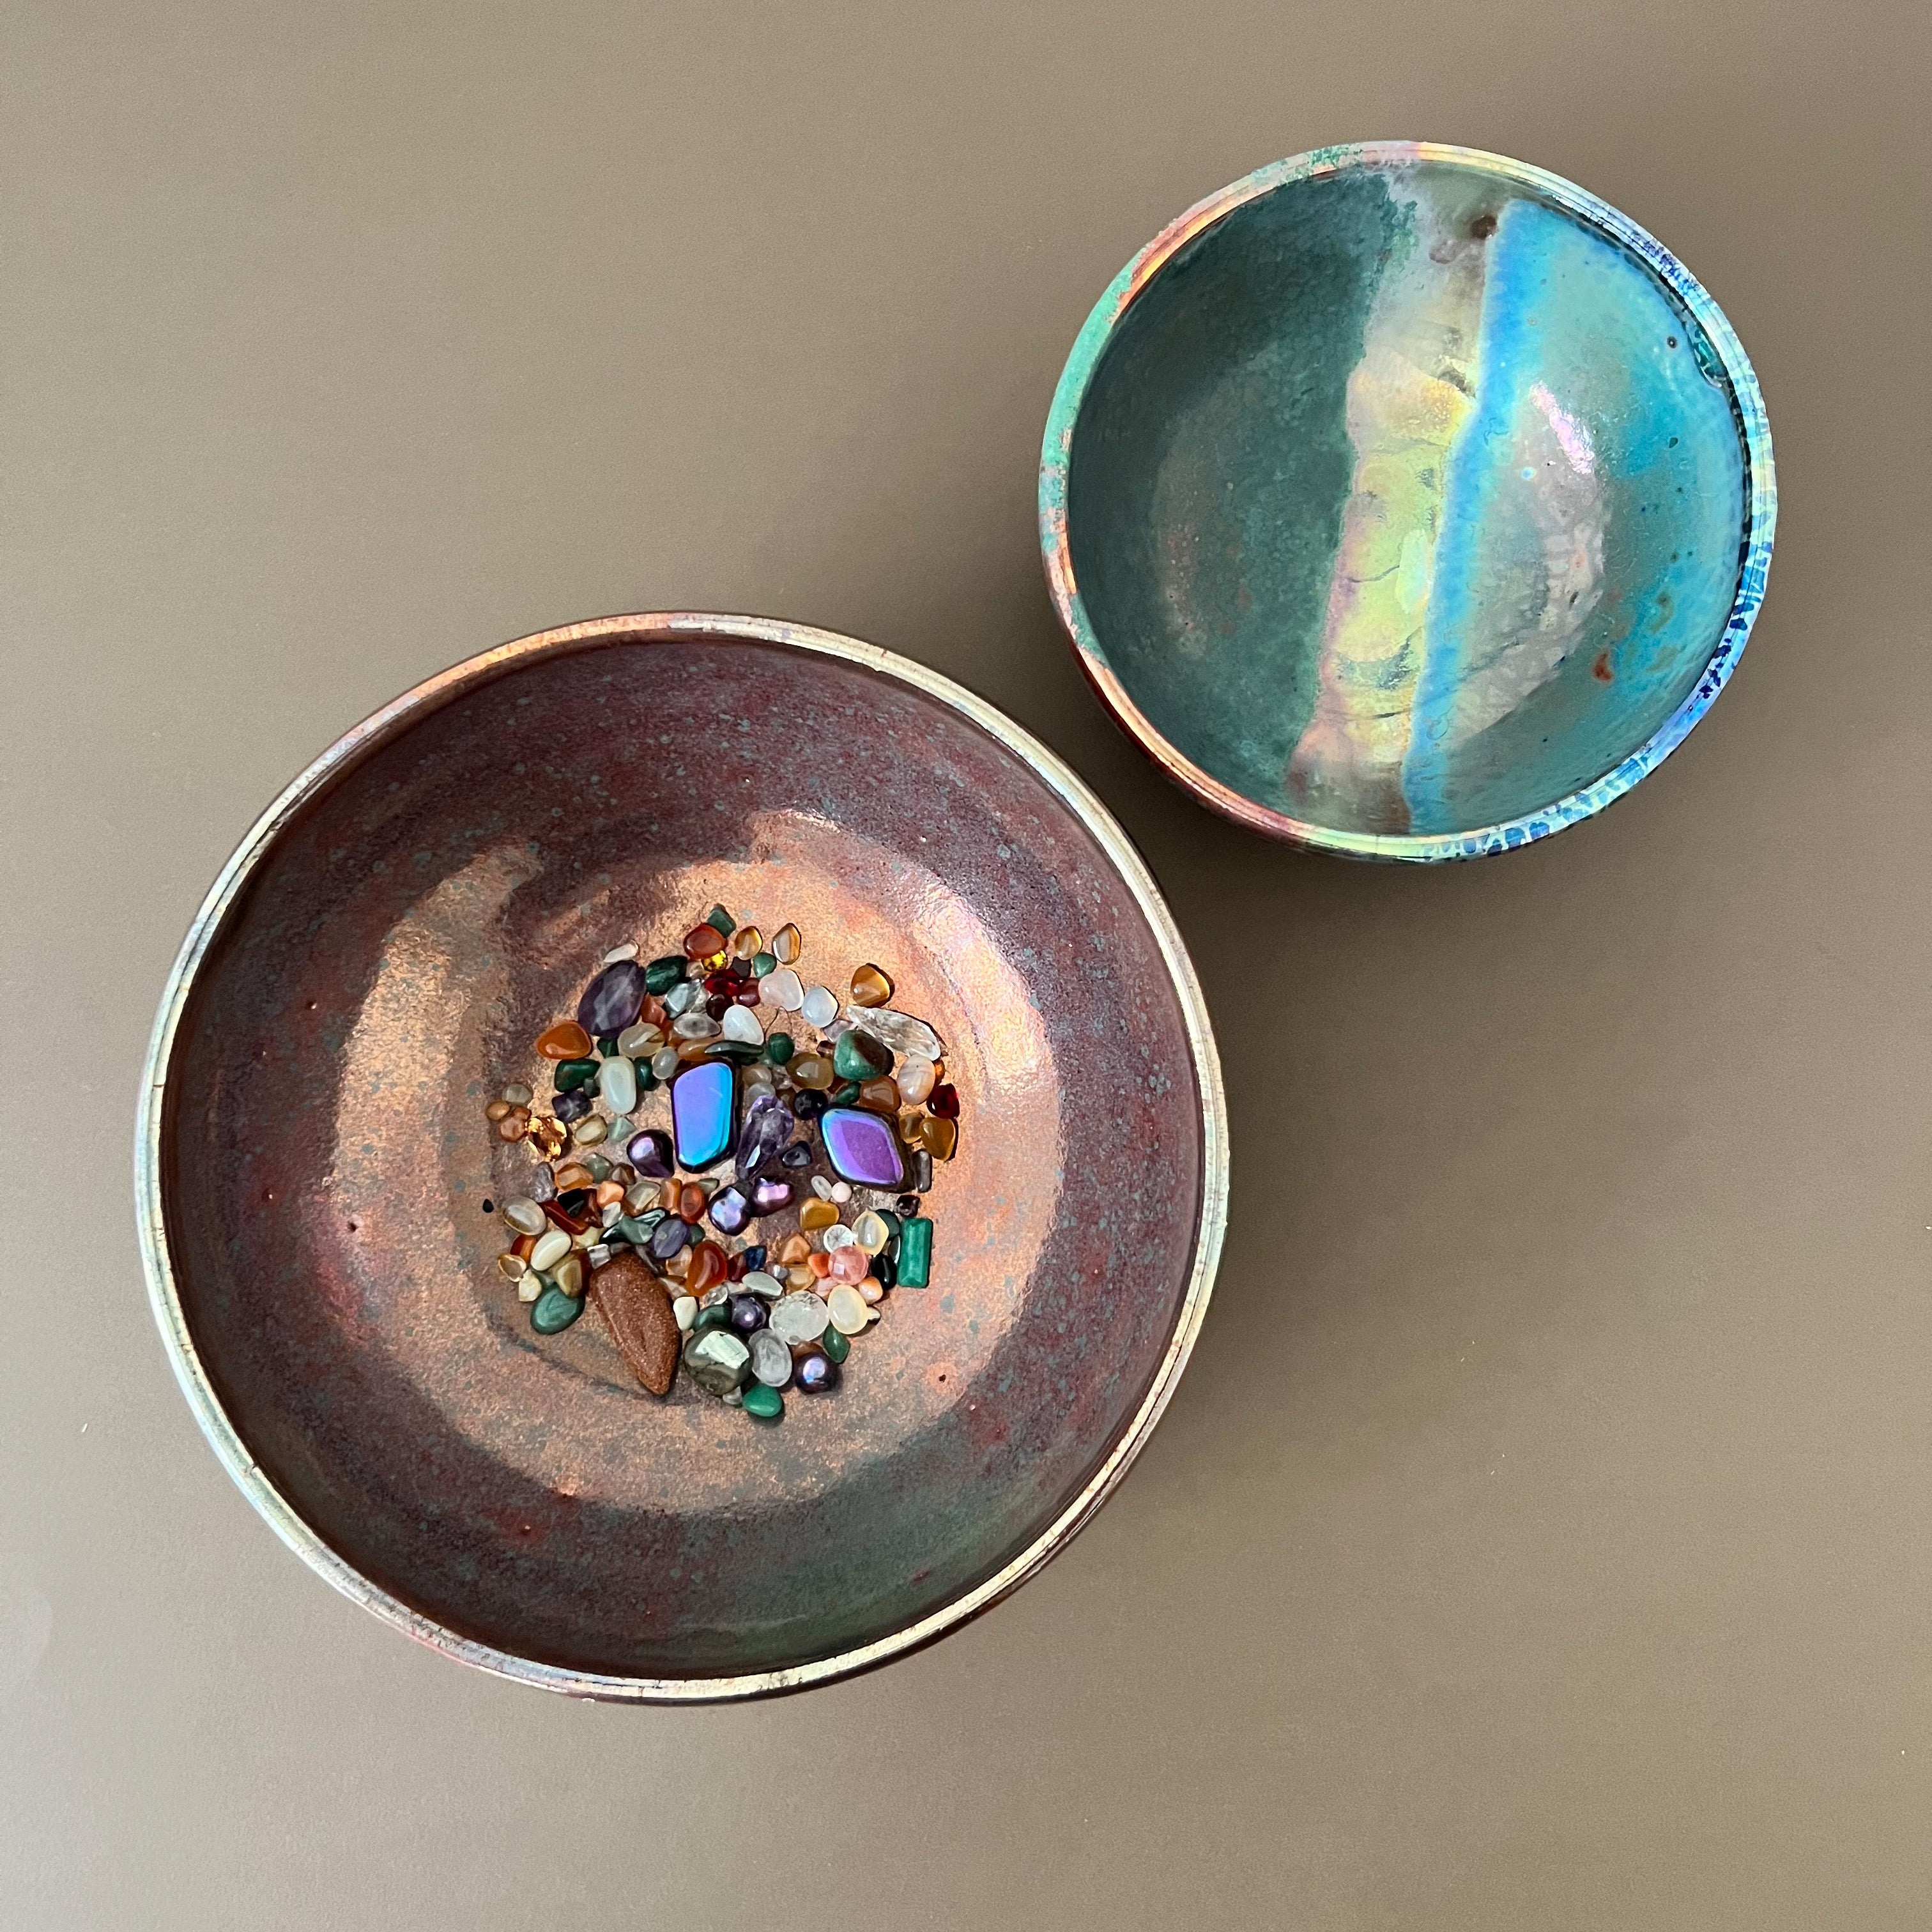 handmade luxury nesting bowls for entertaining gifting and decorating